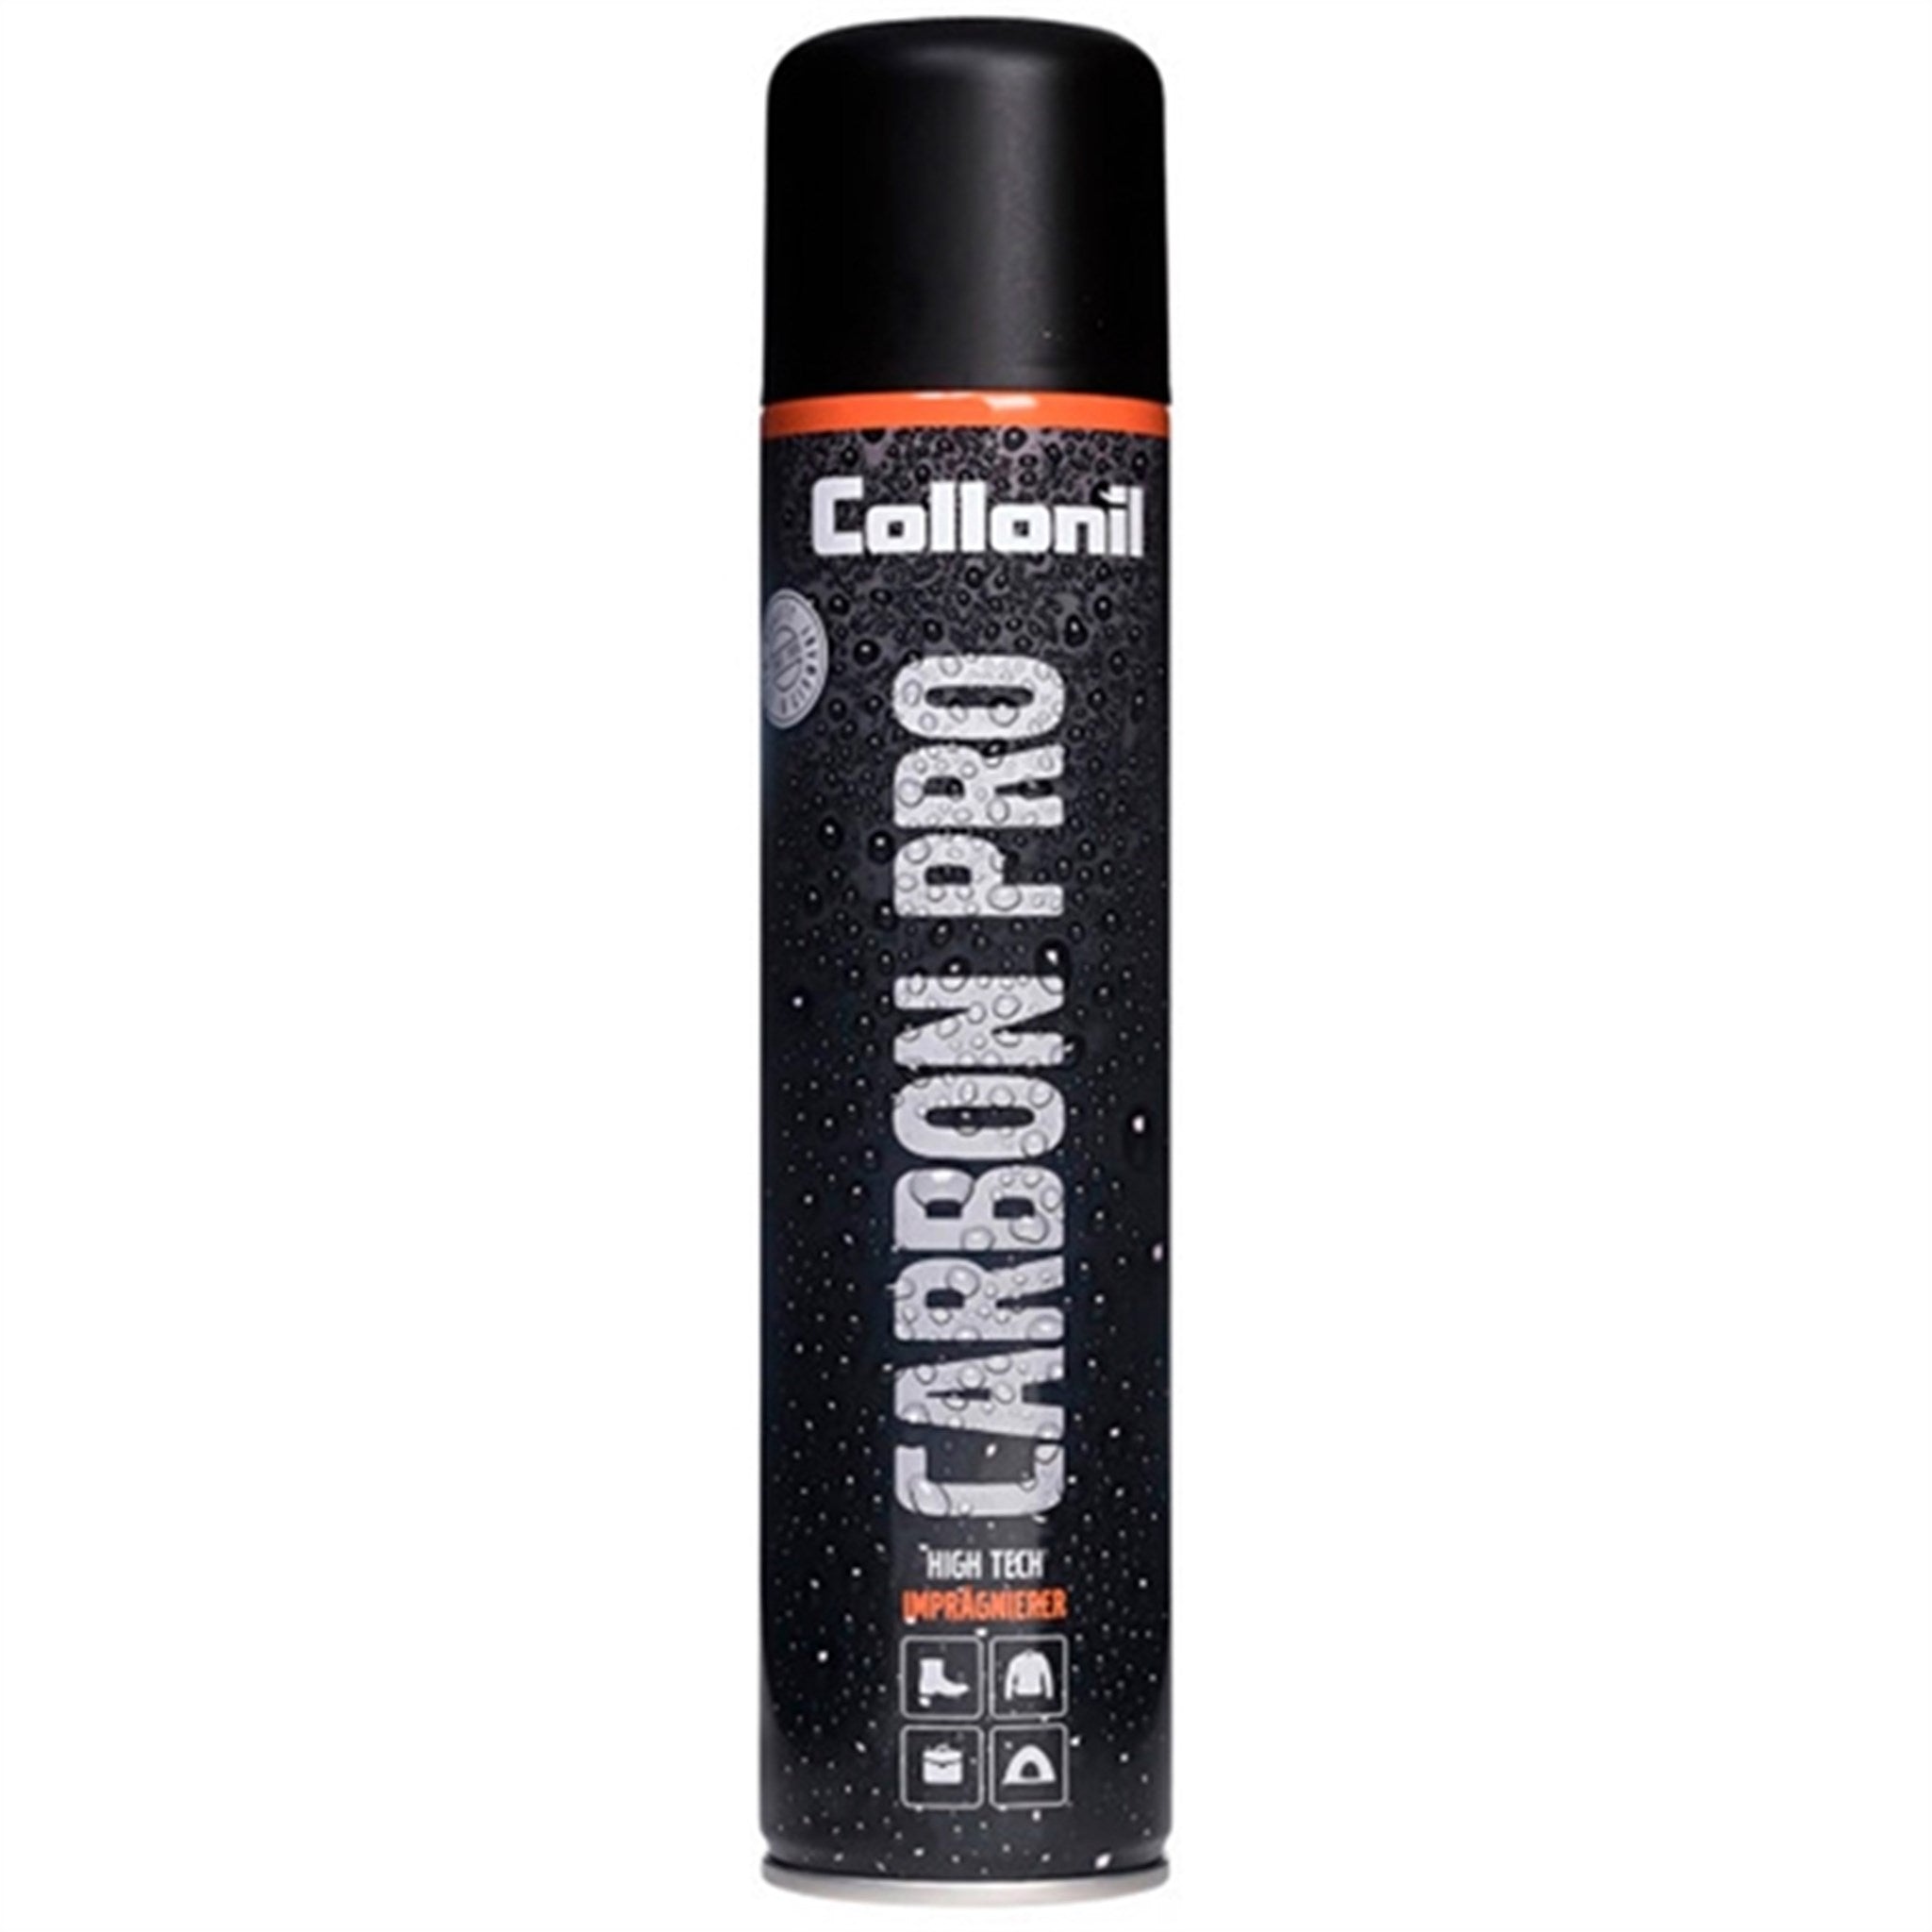 Collonil Carbon Pro Impregnation 300 ml